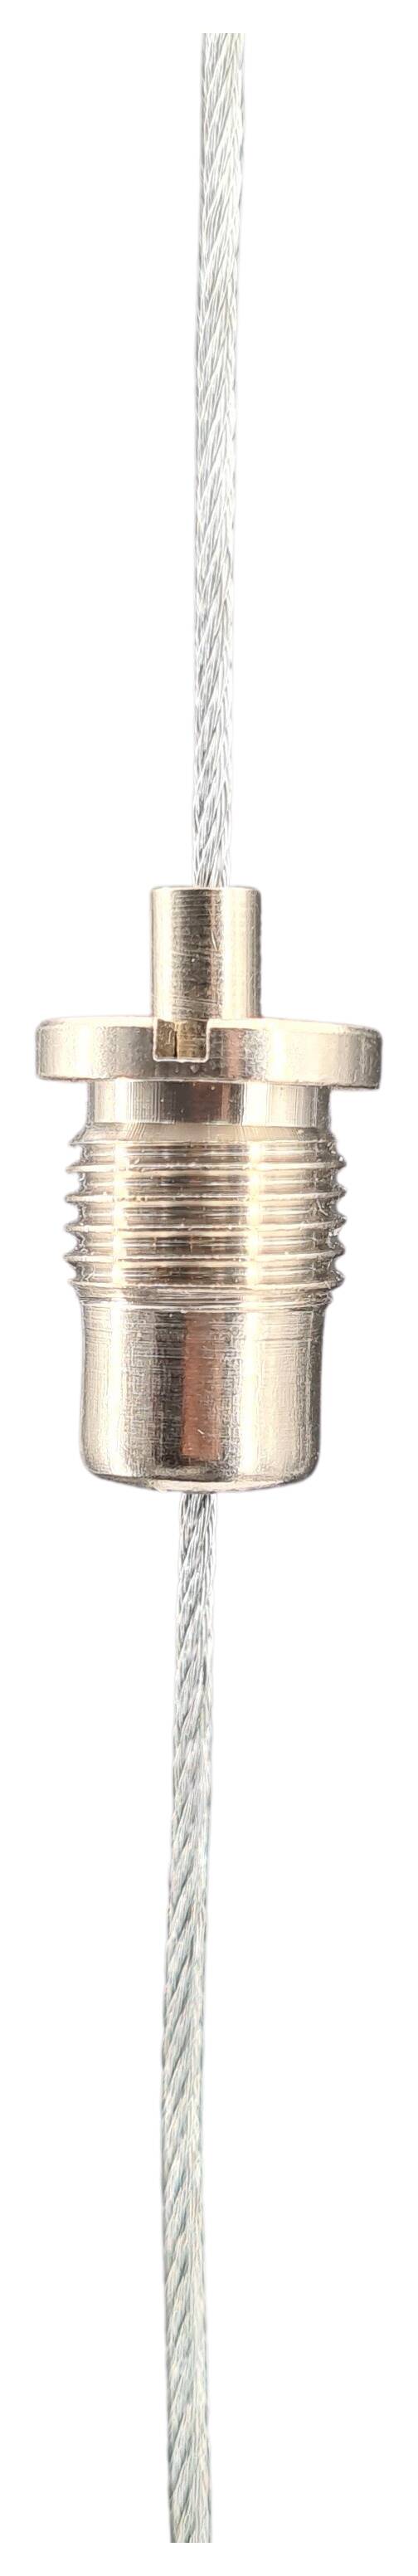 brass cableblocker with collar + slot 12x16 partial thread M10x1x8 male nickel